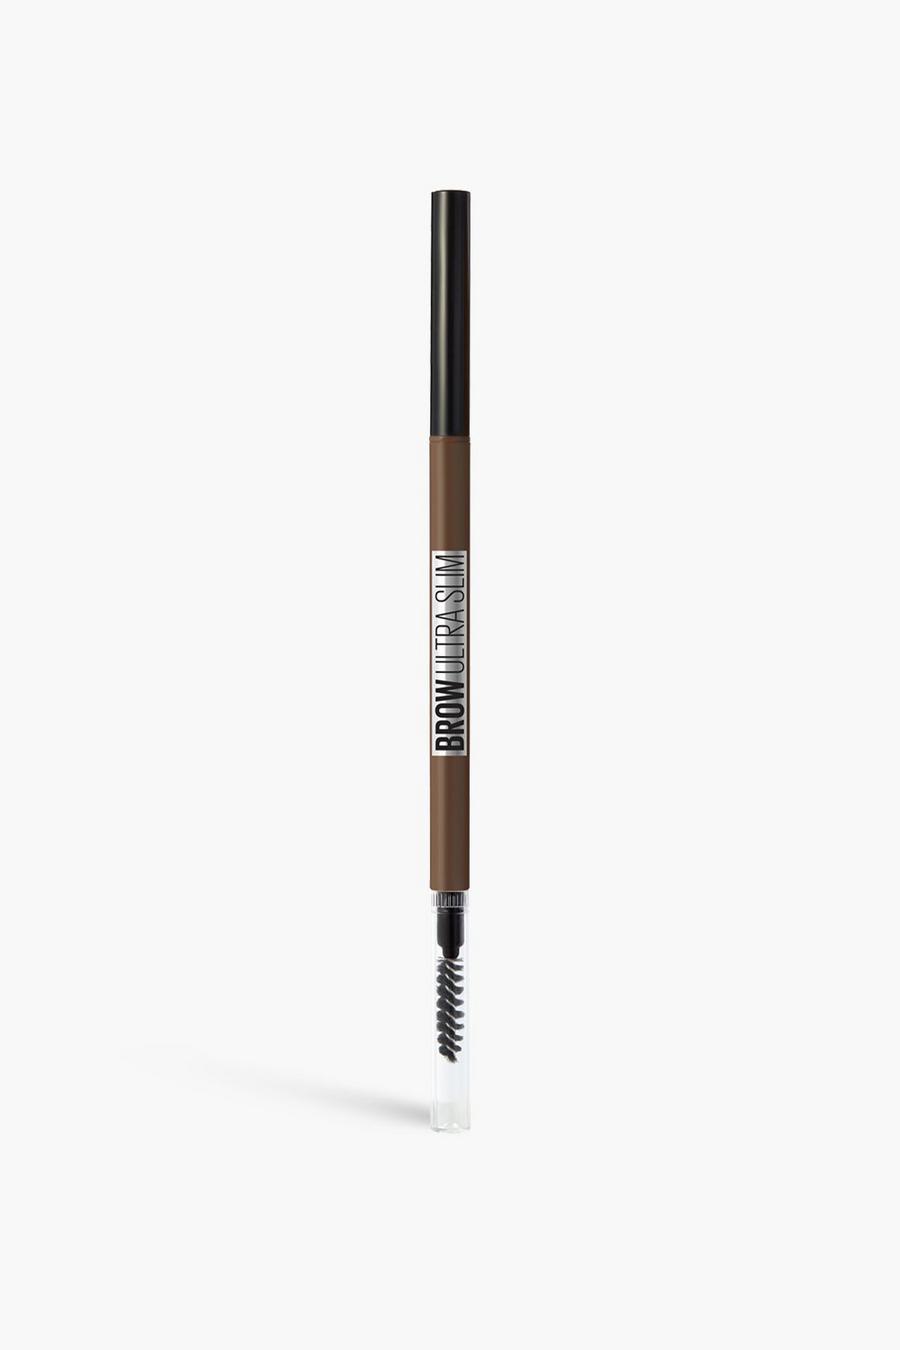 Maybelline Express Brow Pencil - 04 Medium Brown